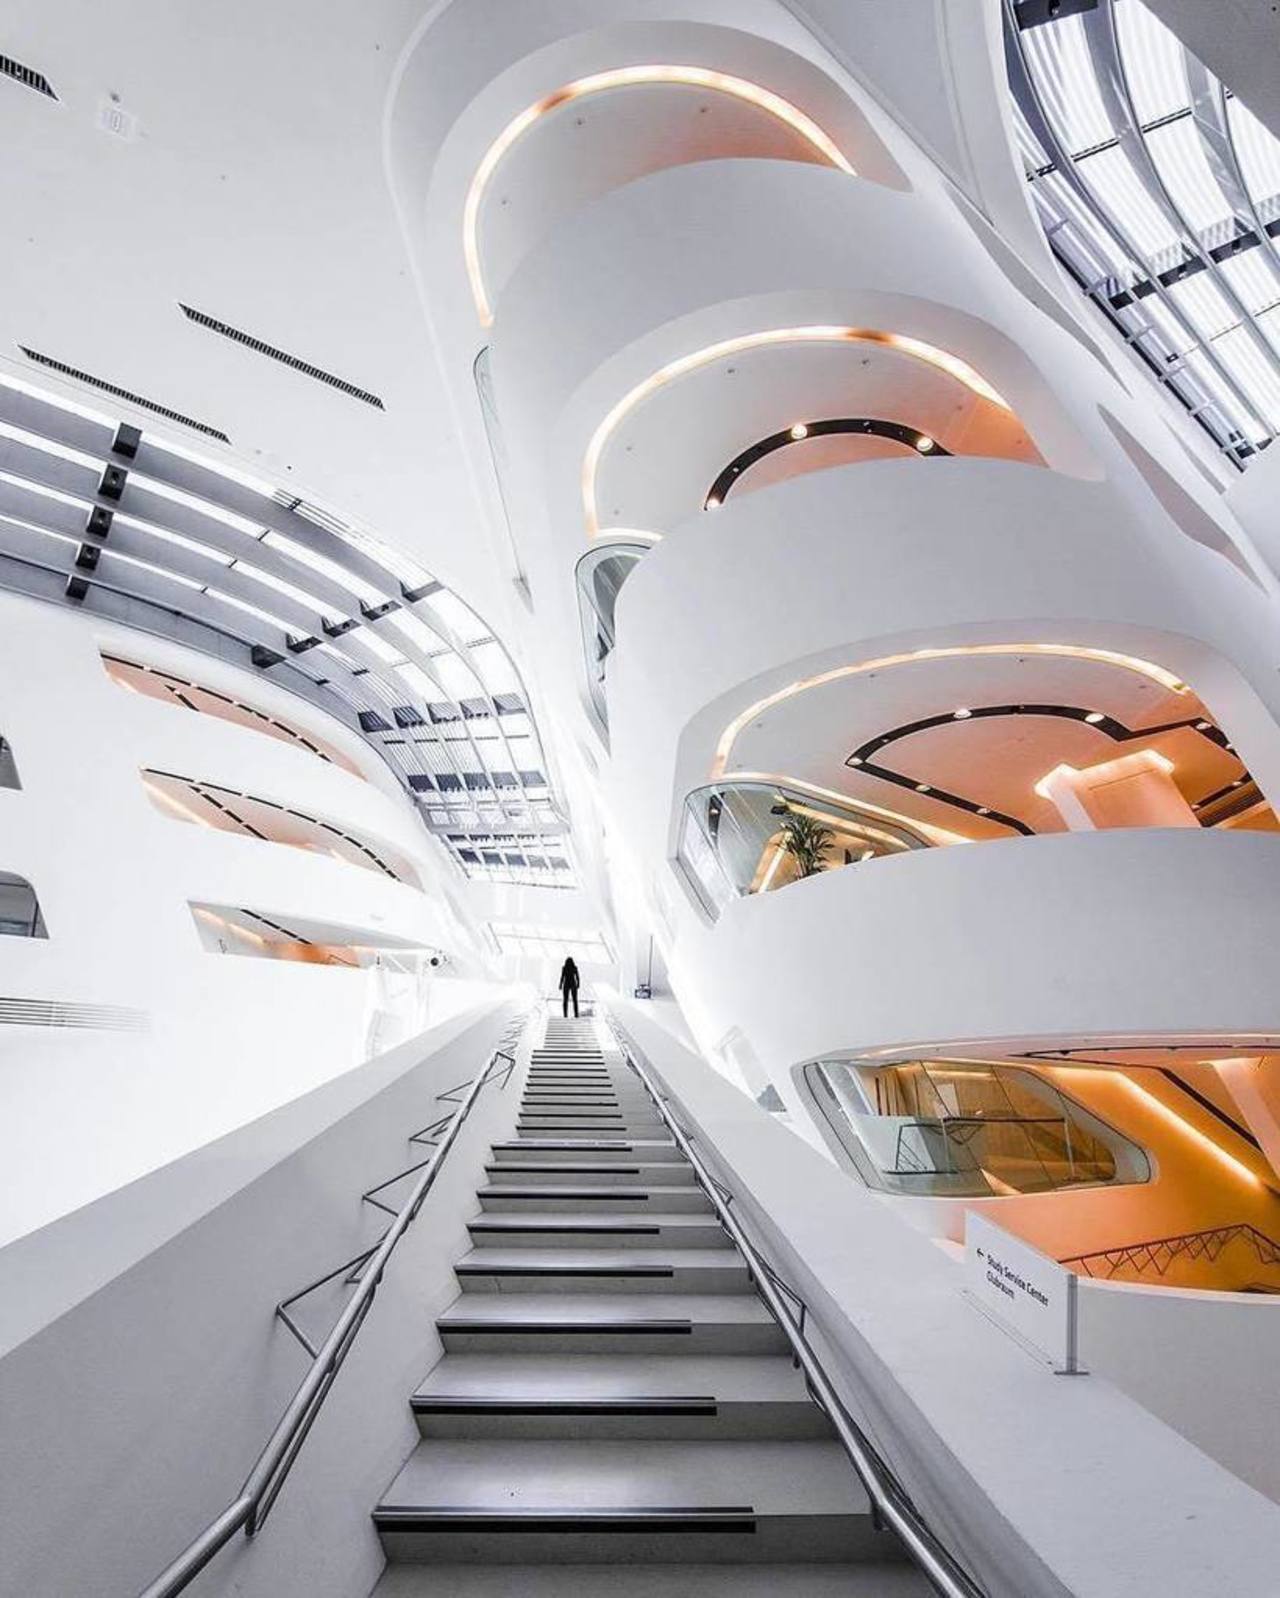 RT @fubiz: "Lost in Space" by @caroklaroo #staircase #design #urban #fubiz #inspiration Mention @fu… http://bit.ly/2kYpCwW https://t.co/lIPnKUS4rB